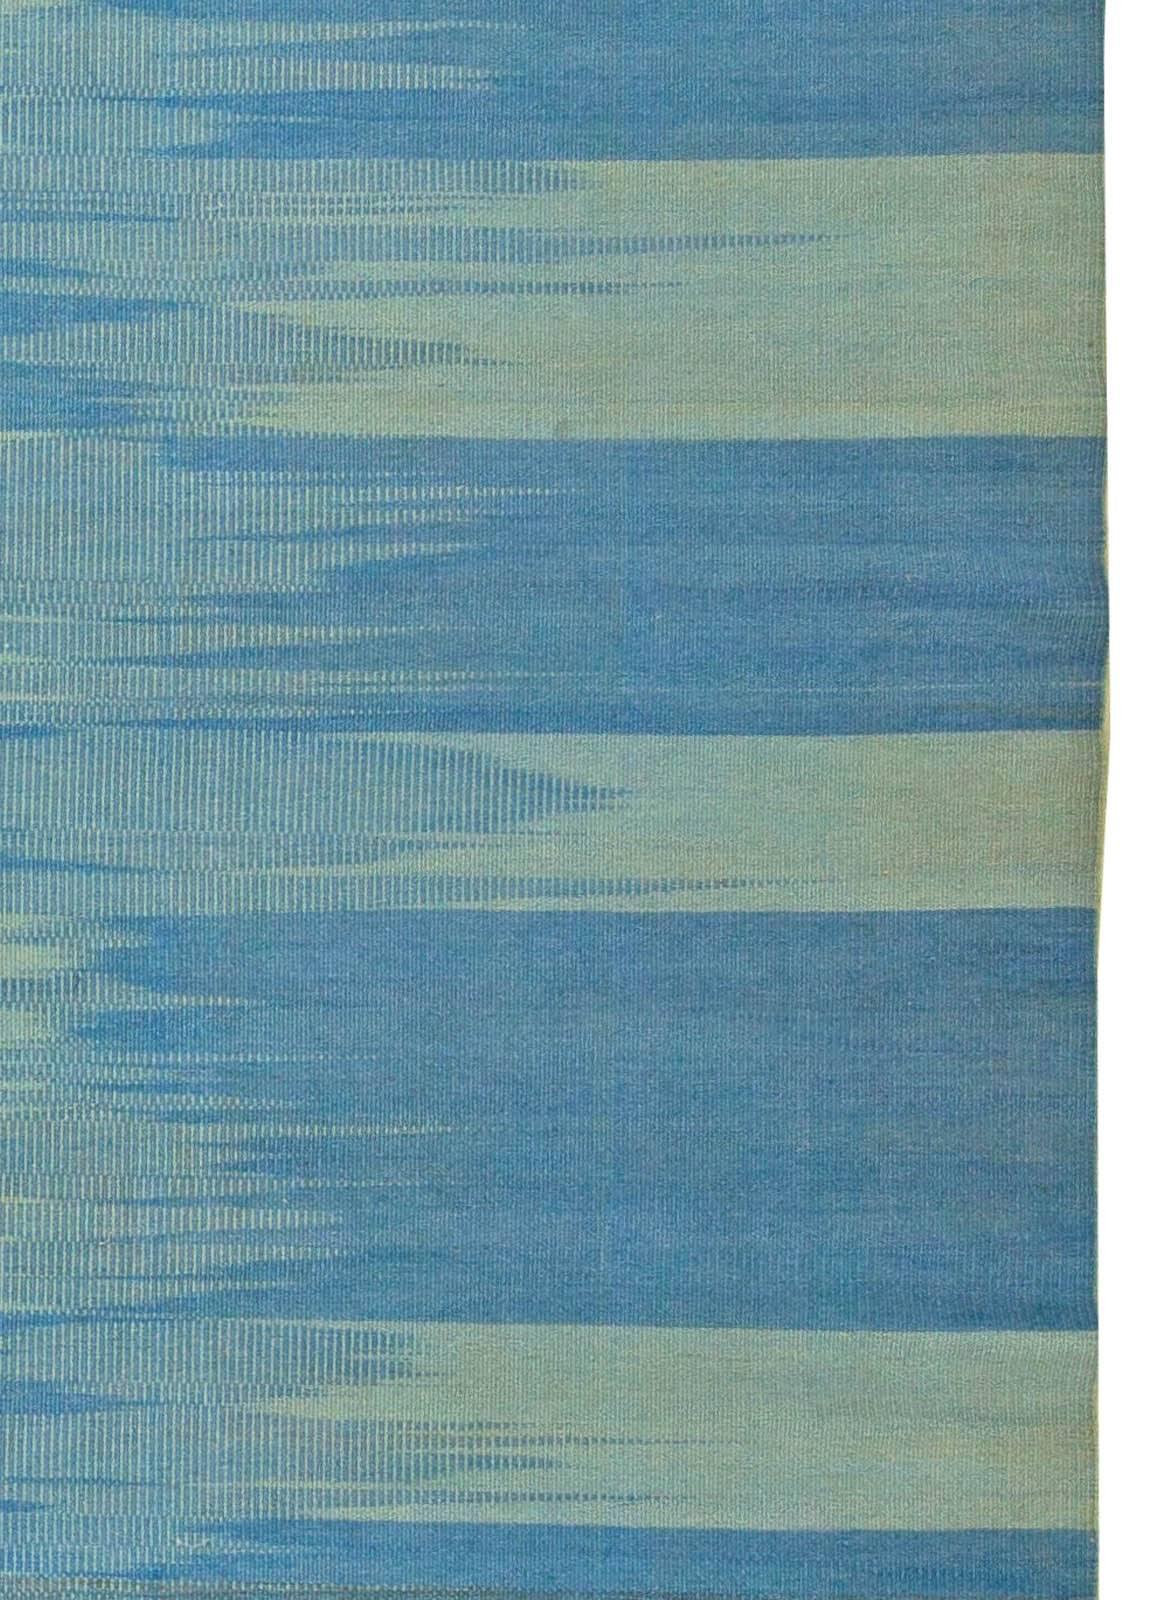 Hand-Knotted Contemporary Blue Handmade Kilim Rug by Doris Leslie Blau For Sale